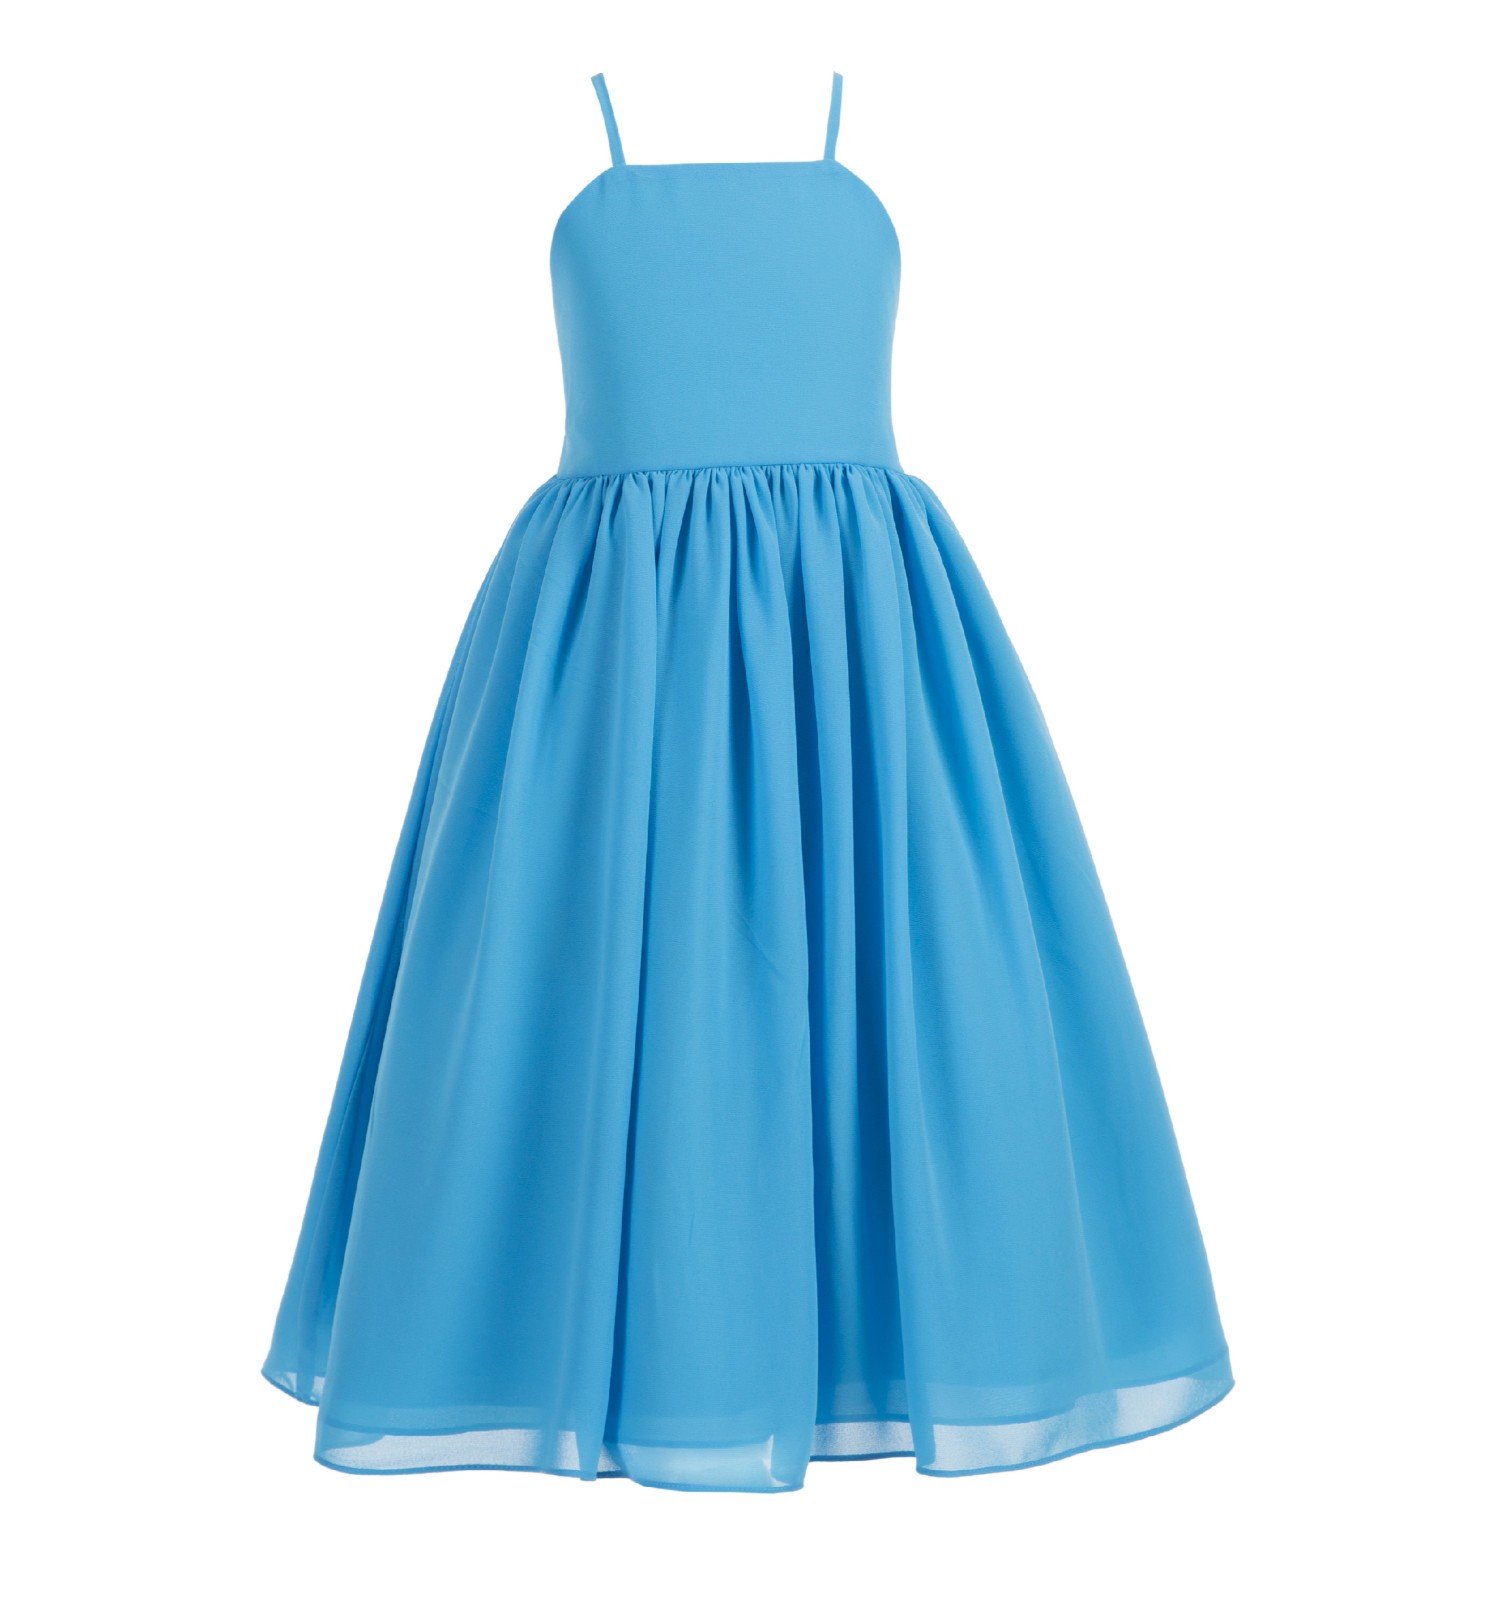 Turquoise Blue Criss Cross Chiffon Flower Girl Dress Summer Dresses 191